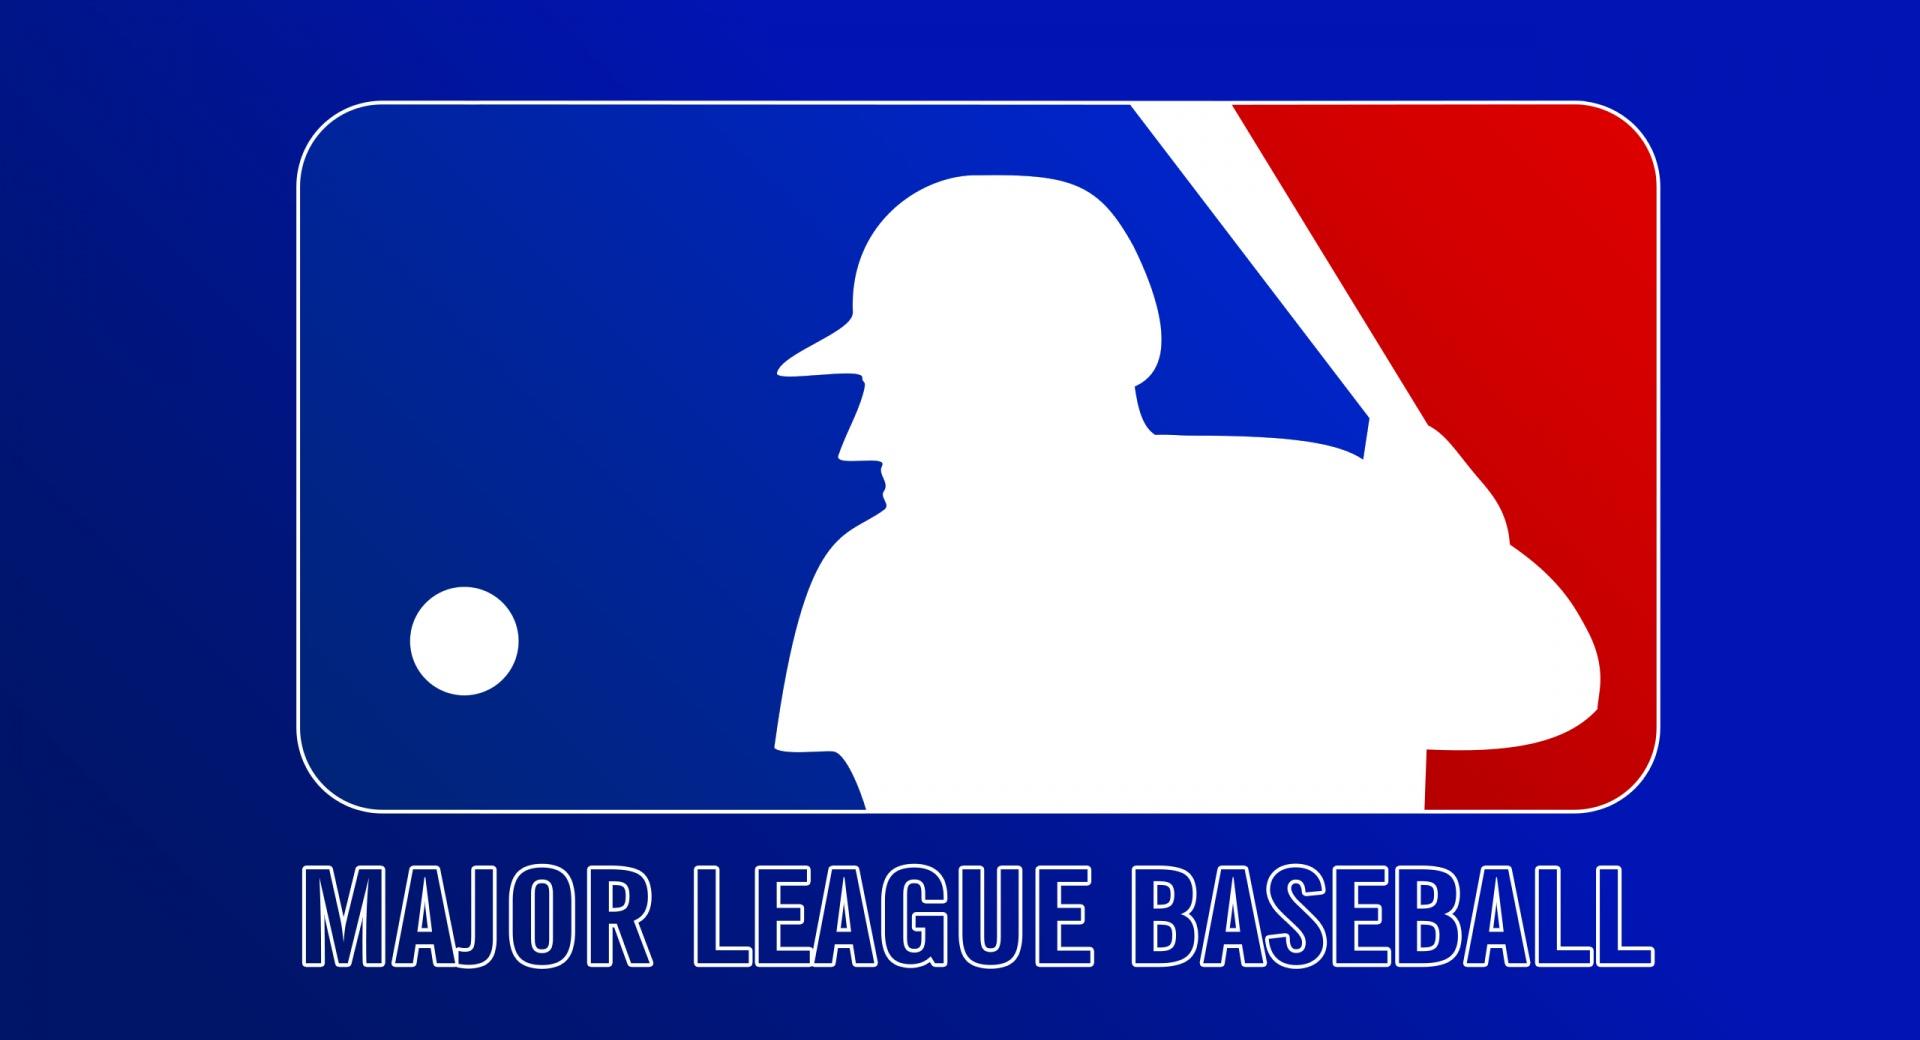 Major League Baseball (MLB) at 1024 x 768 size wallpapers HD quality